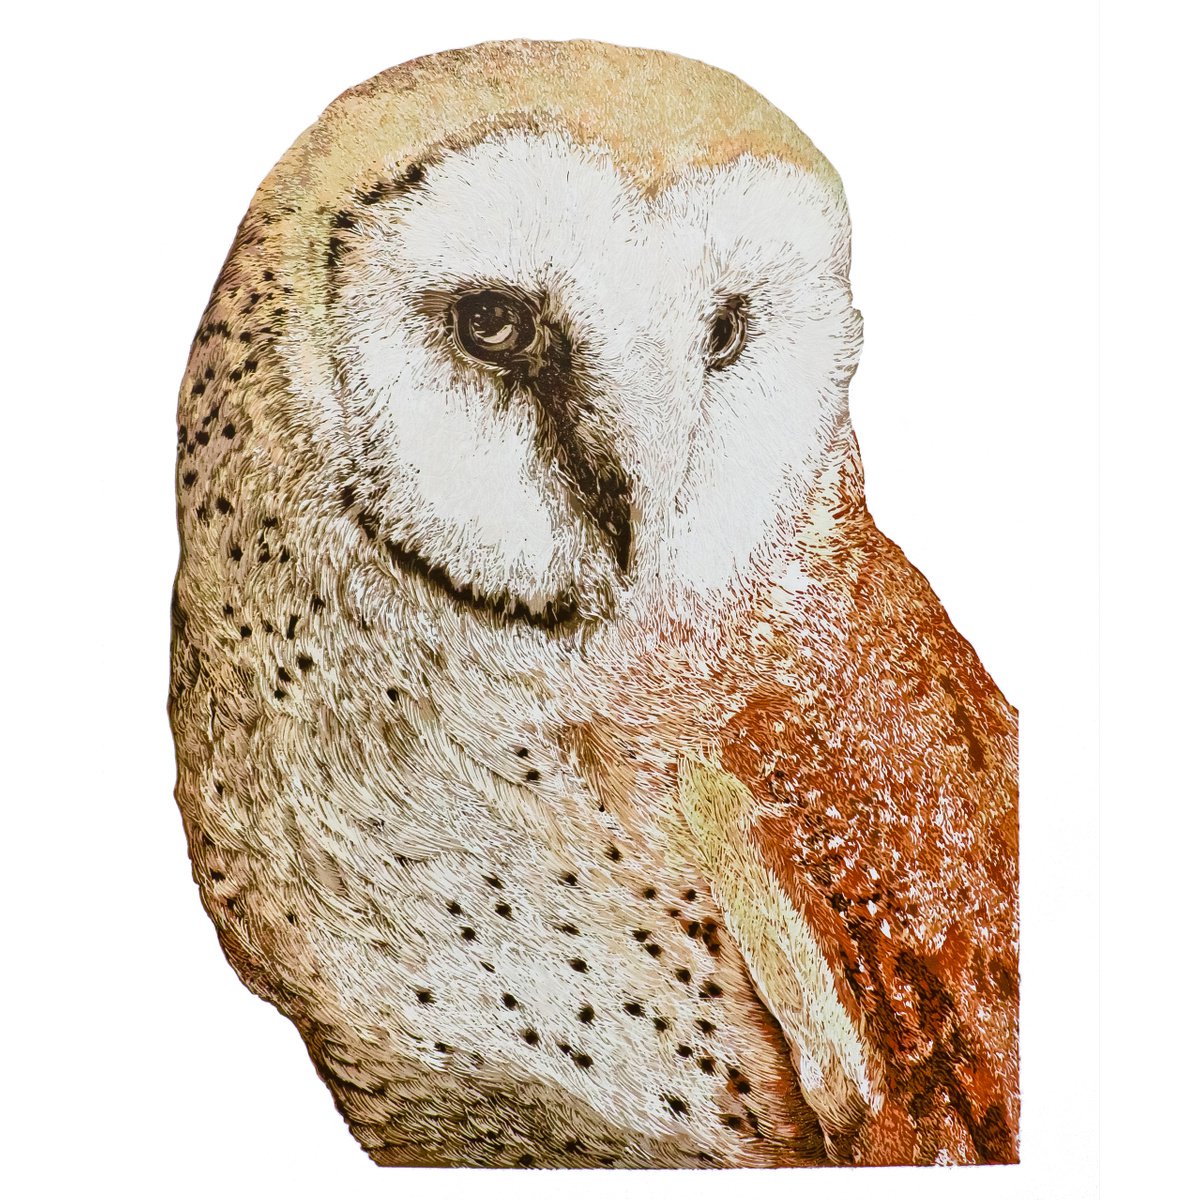 Barn Owl by Wayne Longhurst